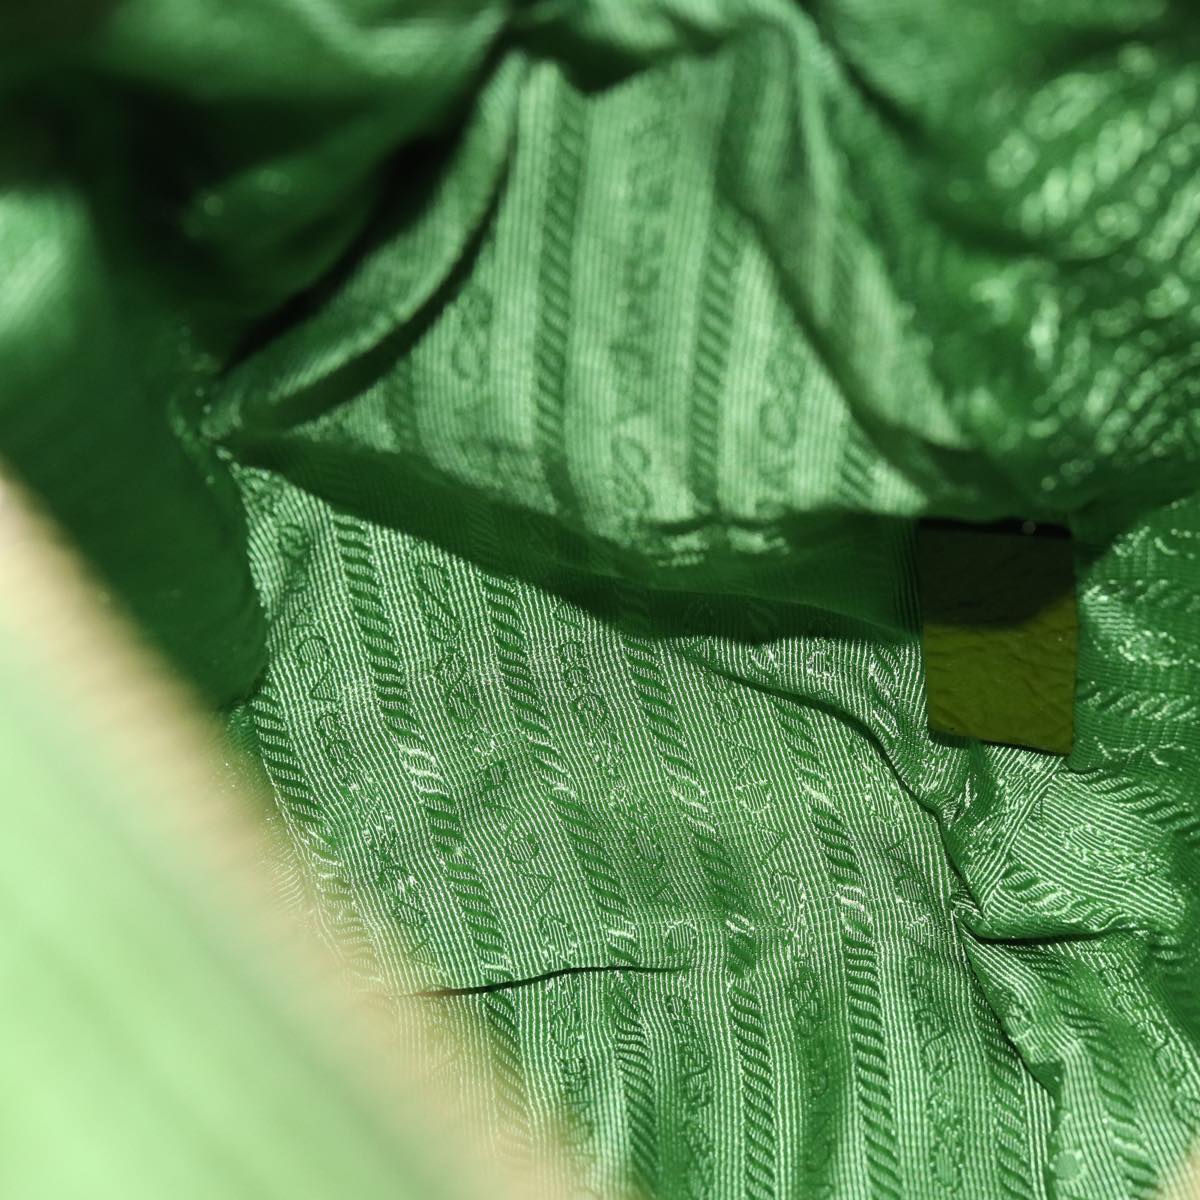 PRADA Shoulder Bag Nylon Green Auth 75120